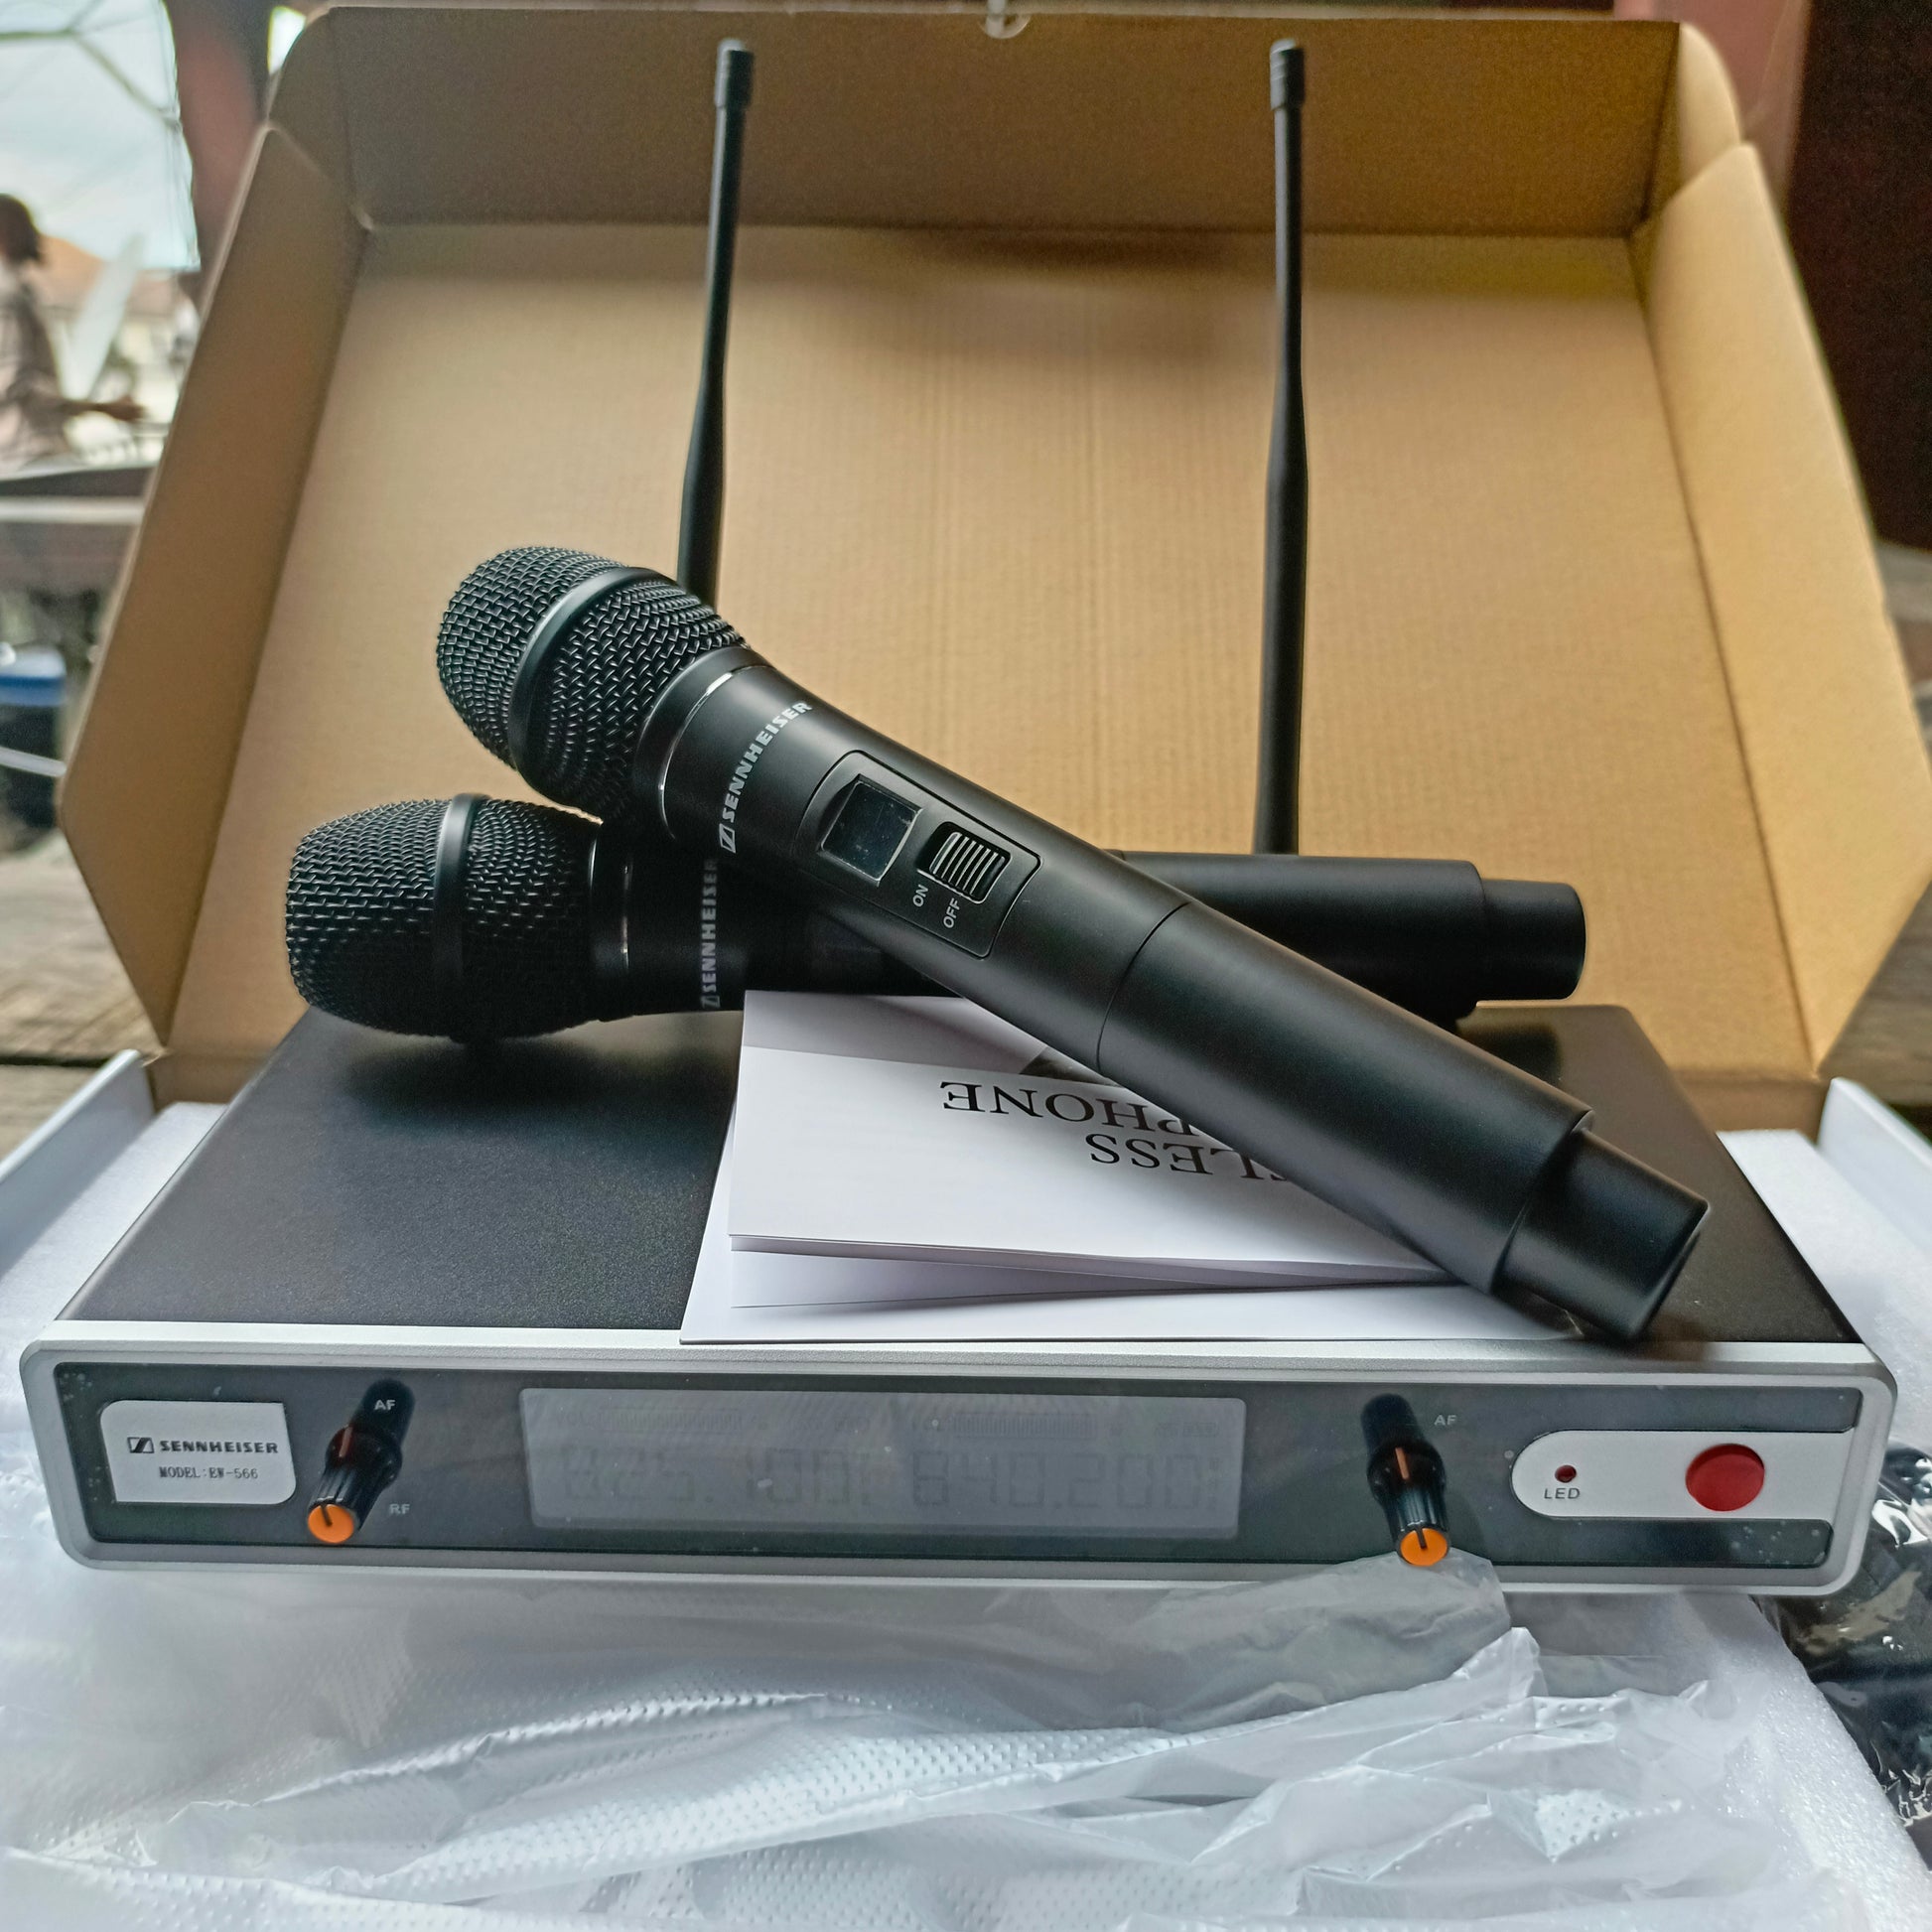 SENNHEISER EW-566 Professional Wireless Dynamic Vocal Microphone - Brand New